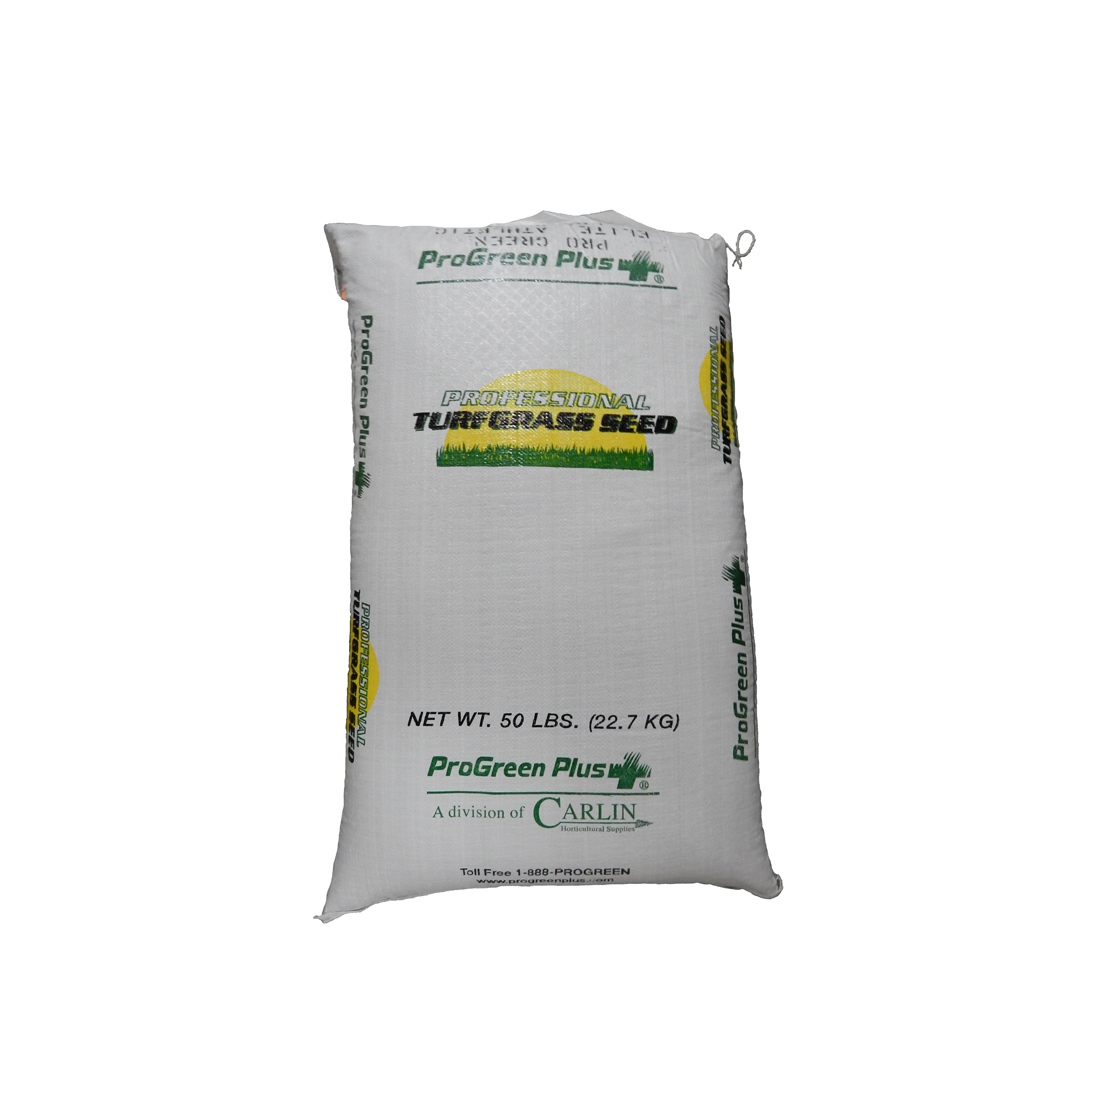 ProGreen Plus 300 Seed 50 lb Bag - Turfgrass Seed